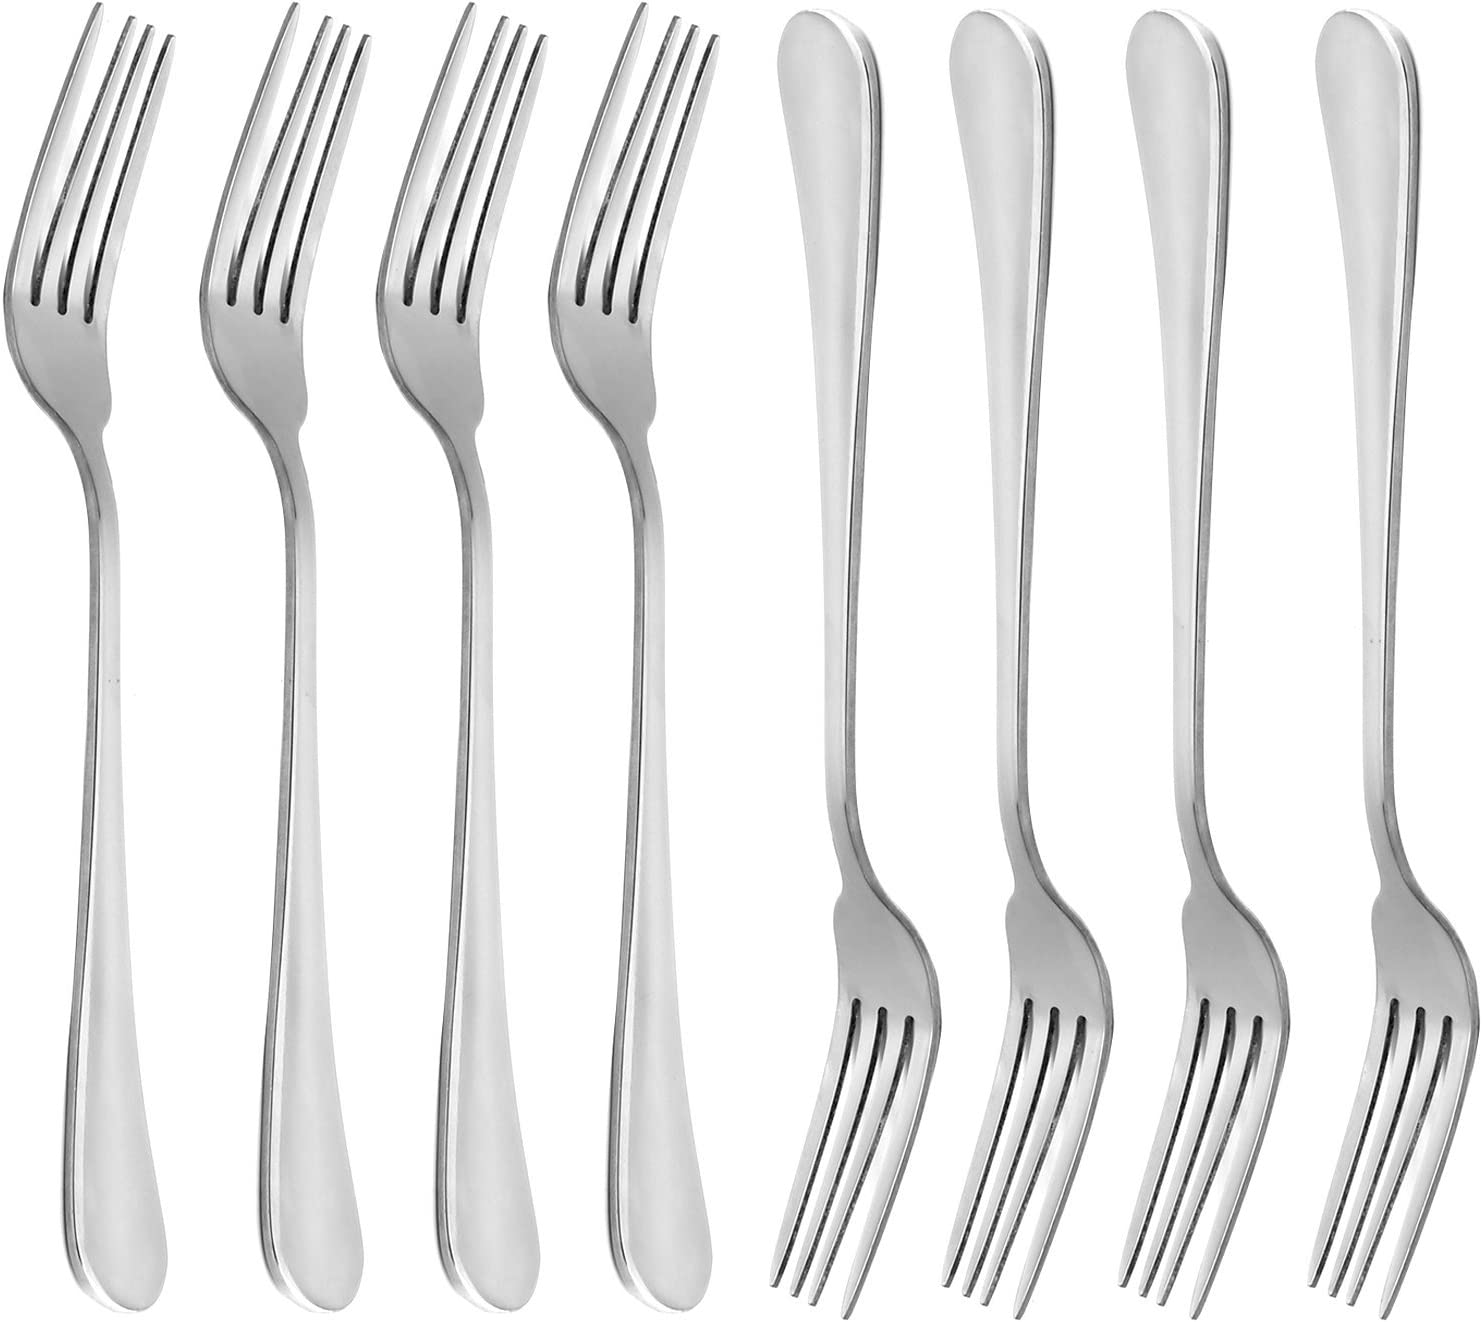 OEM&ODM restaurant flatware wholesale Professional Cutlery Manufacturer.